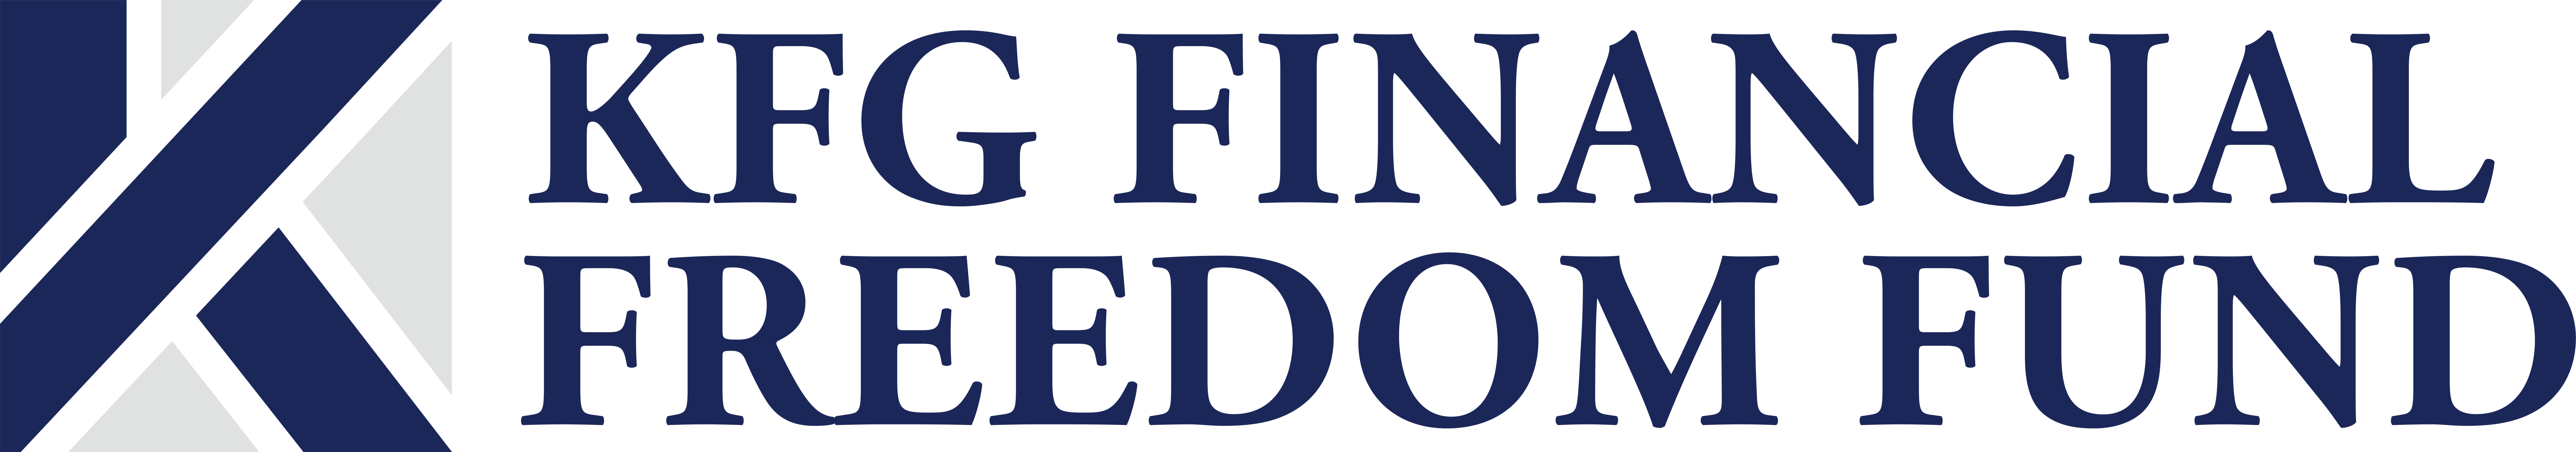 KFG Financial Freedom Fund Logo KFG Blue - No Slogan.png